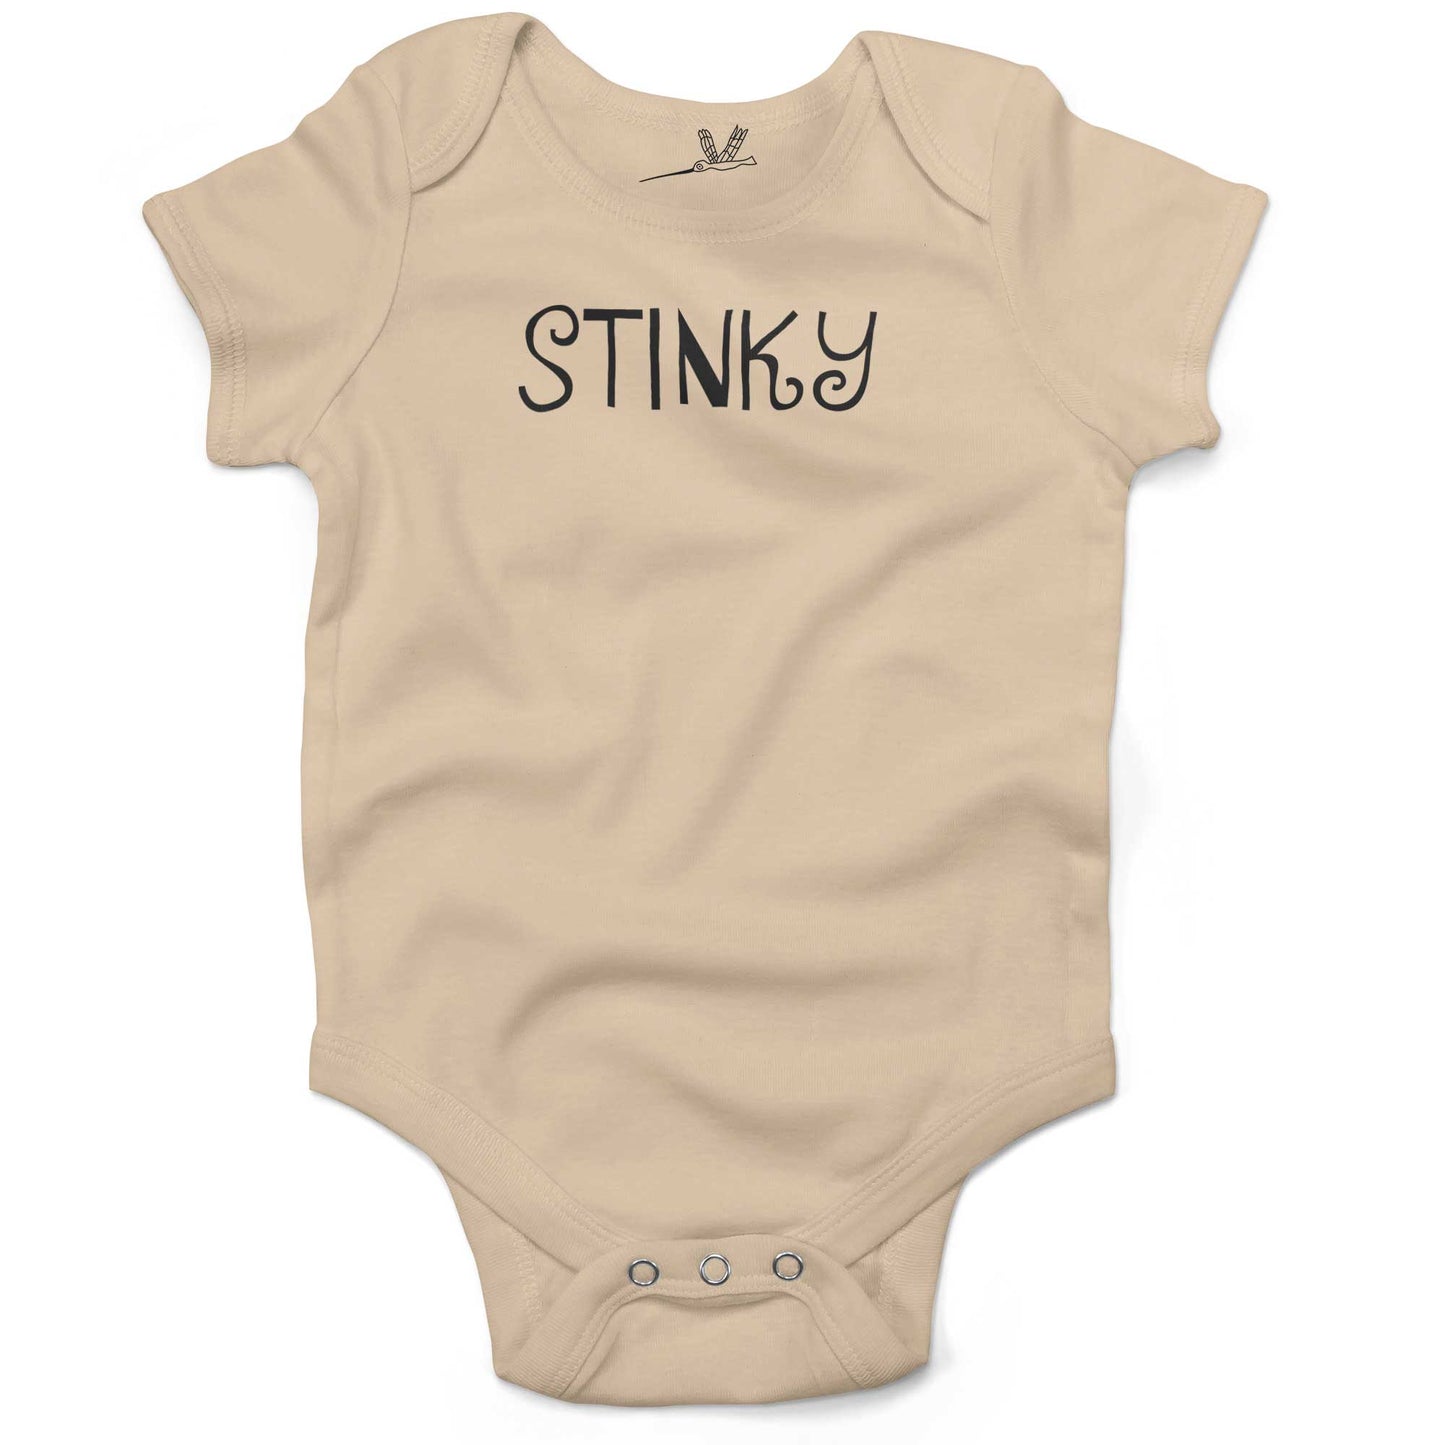 Stinky Infant Bodysuit or Raglan Baby Tee-Organic Natural-3-6 months